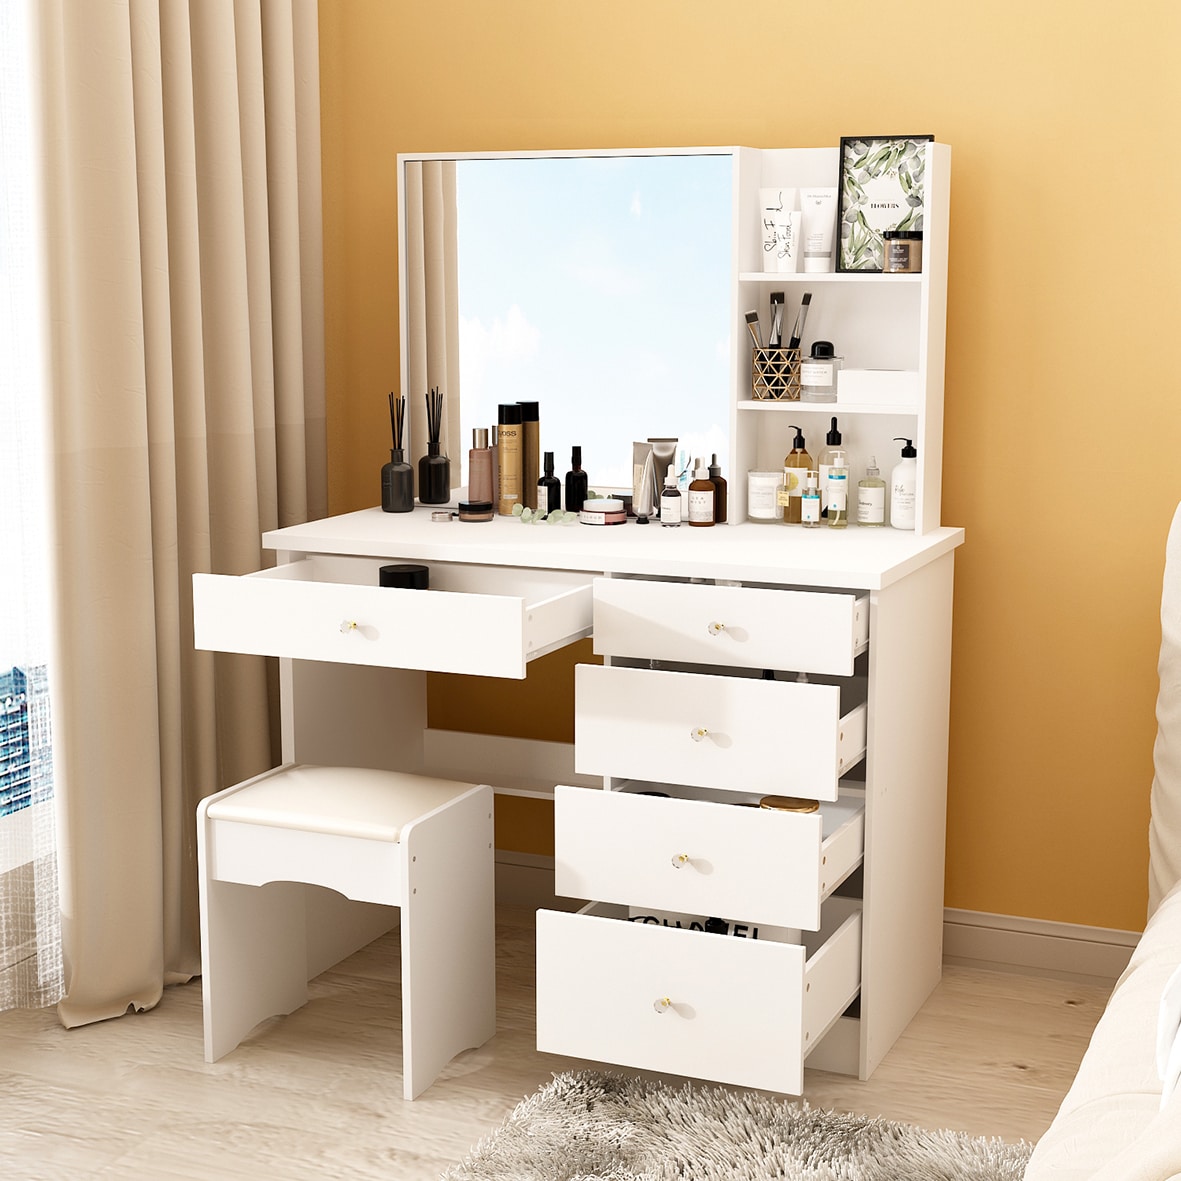 Details about   Makeup Vanity Dressing Table Set Dresser Desk with Stool/Mirror/5 Drawers/Lights 